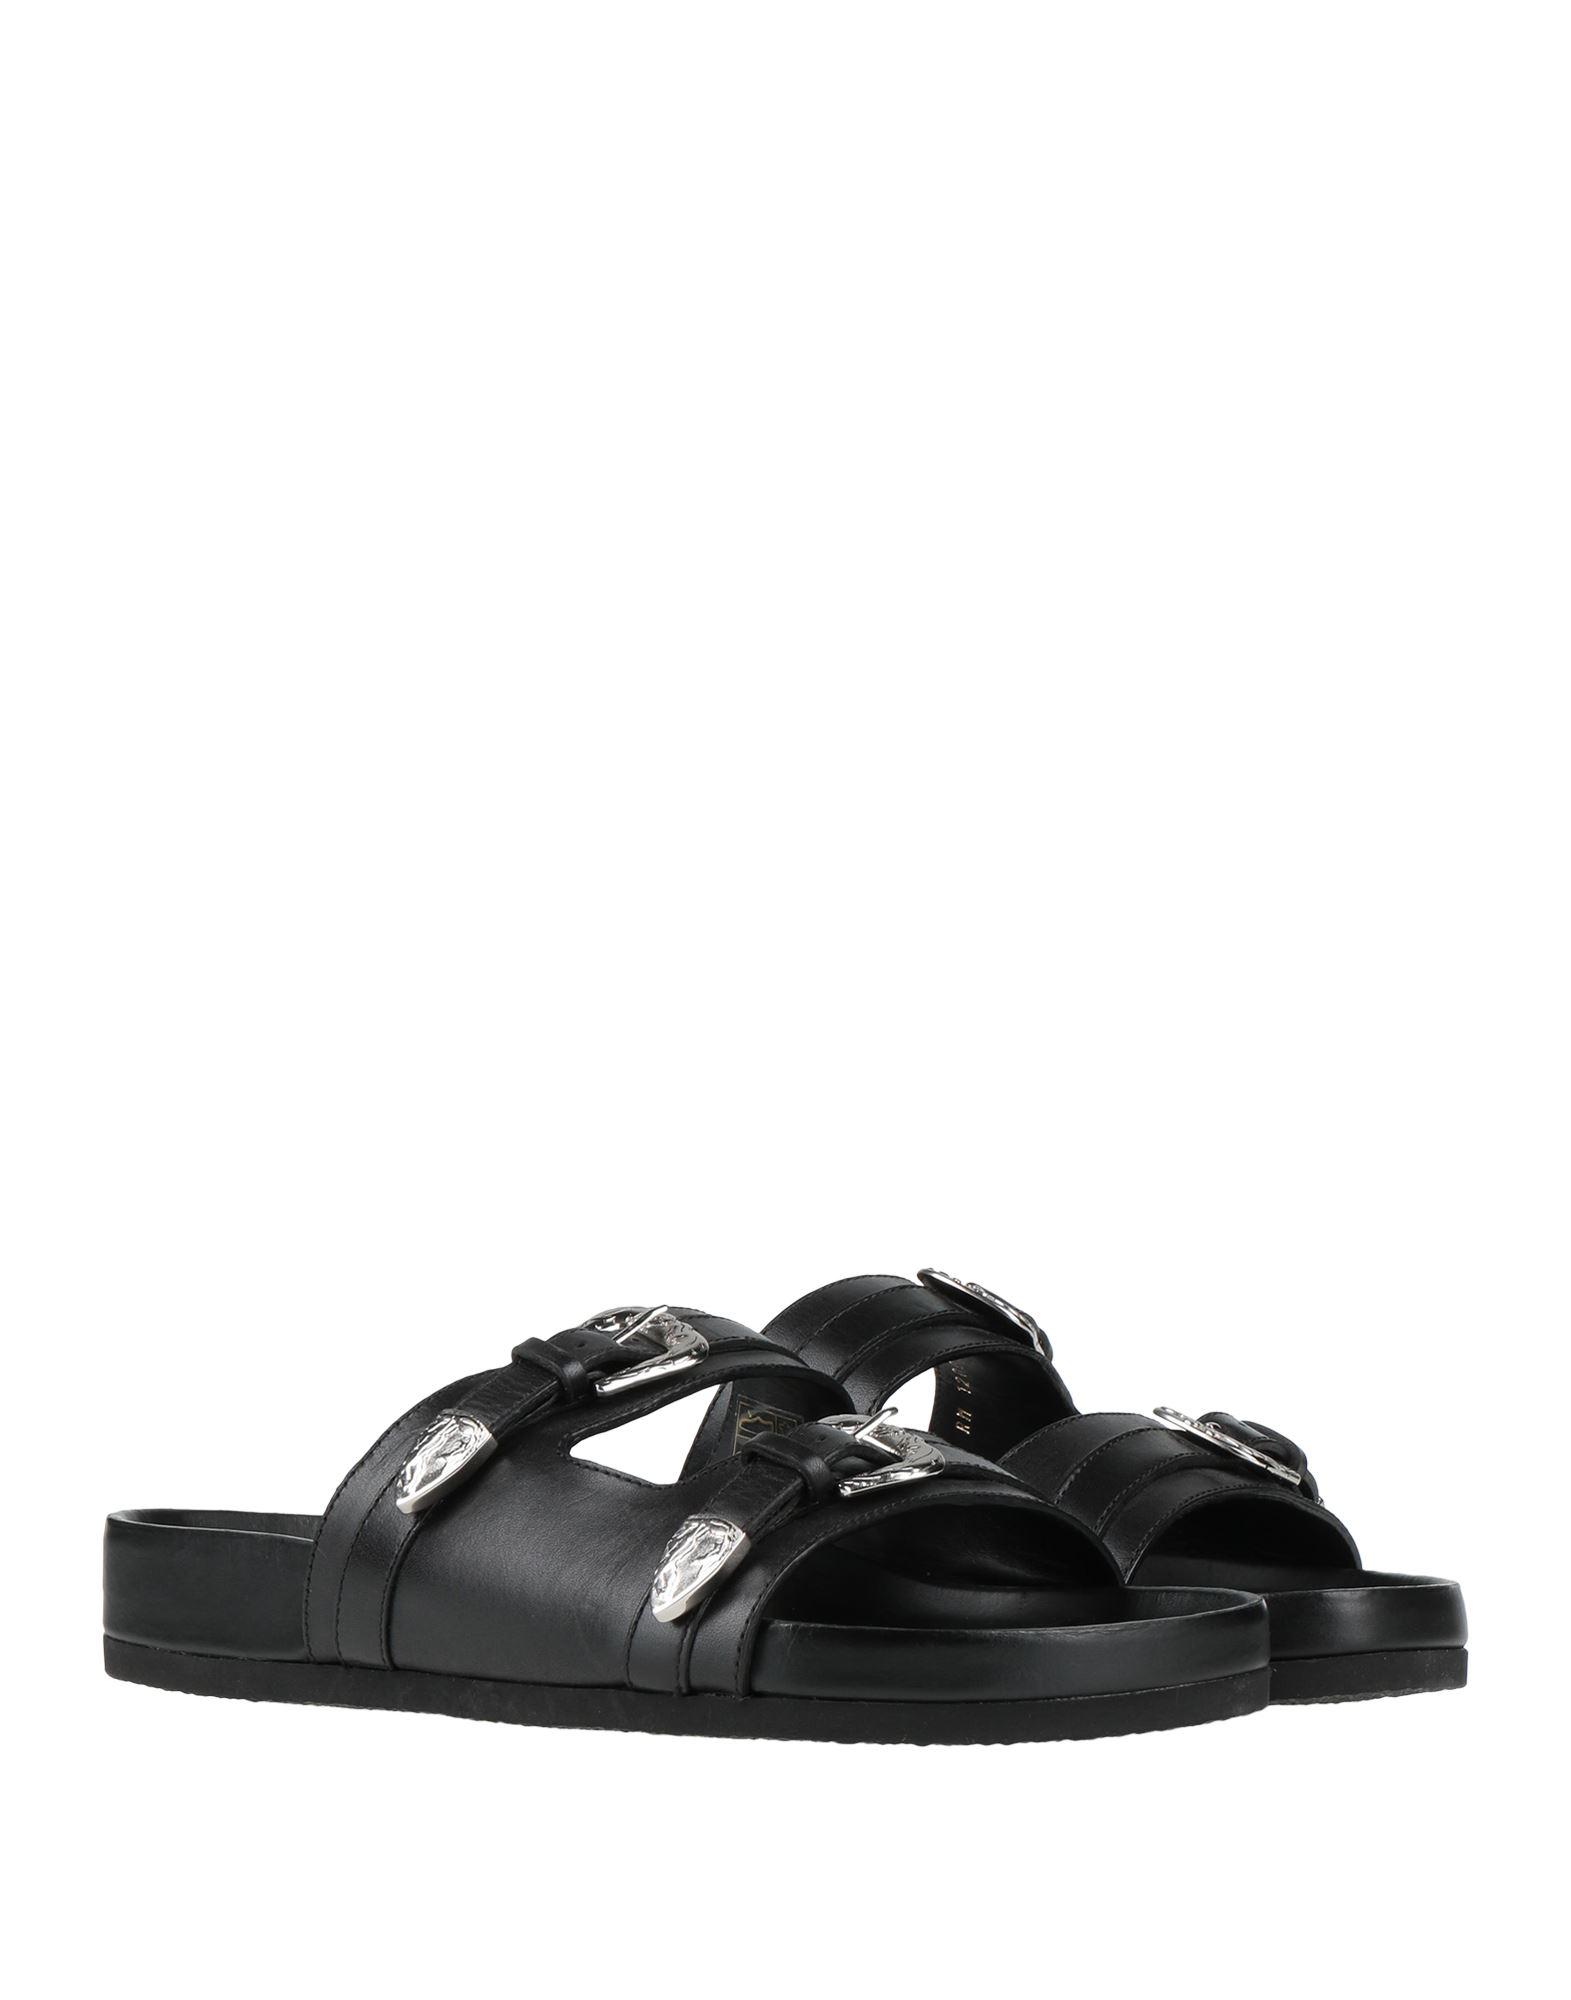 Celine Sandals in Black | Lyst